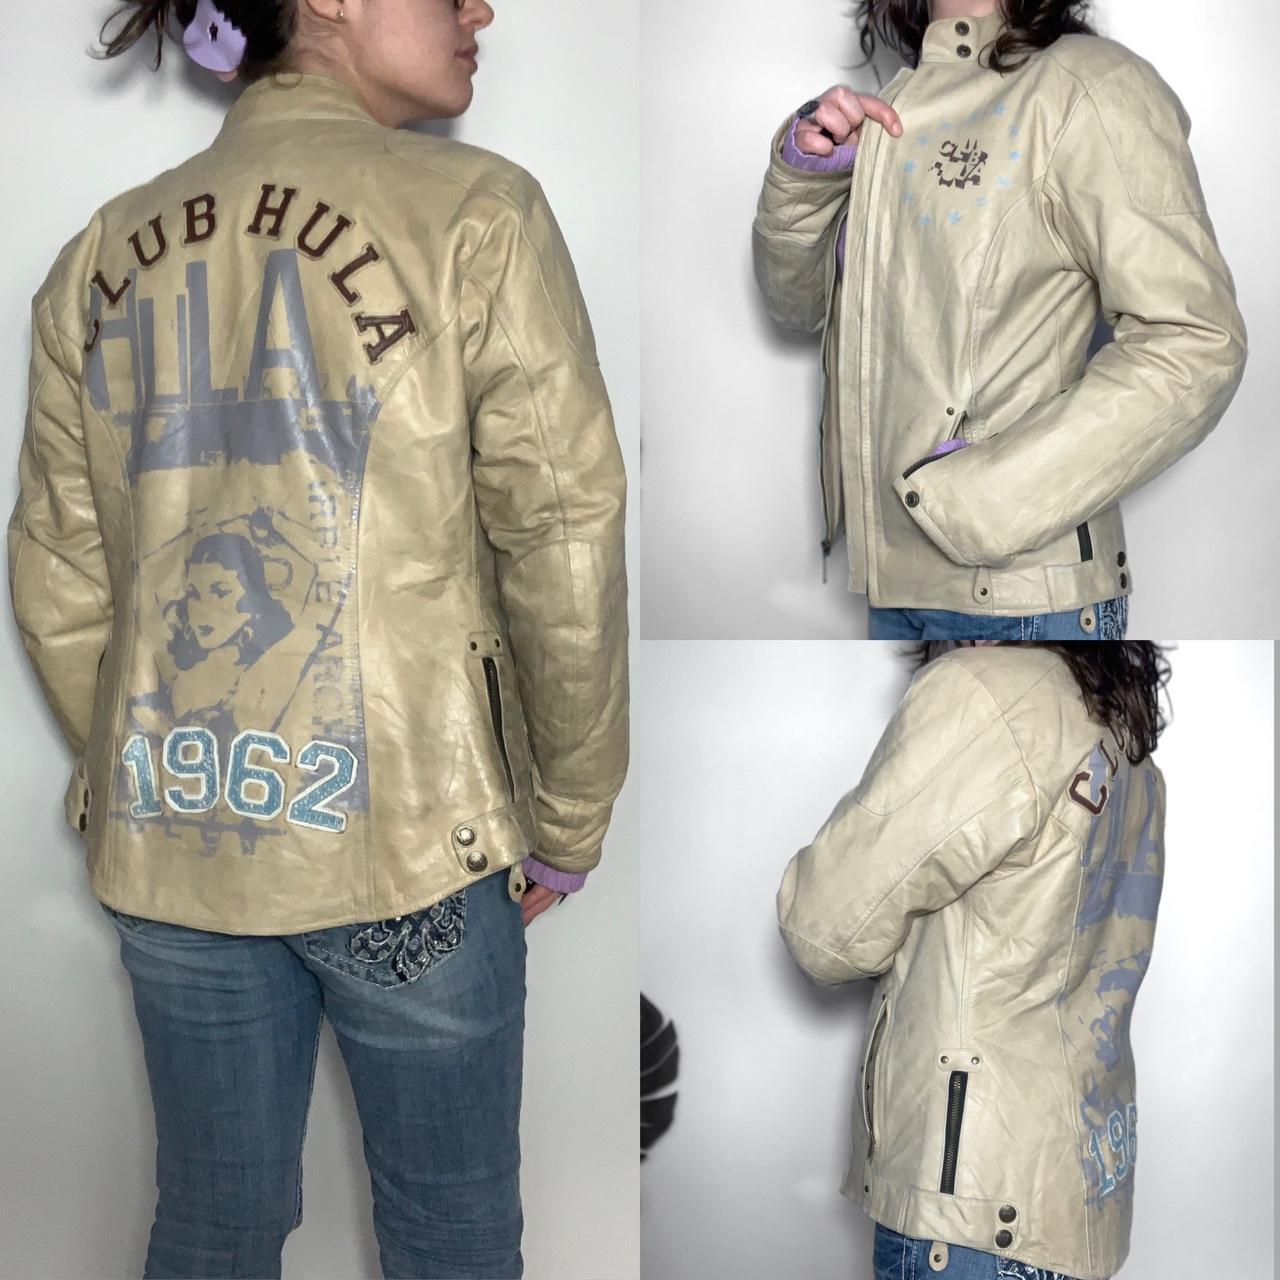 Vintage y2k Club Hula limited edition printed leather moto jacket